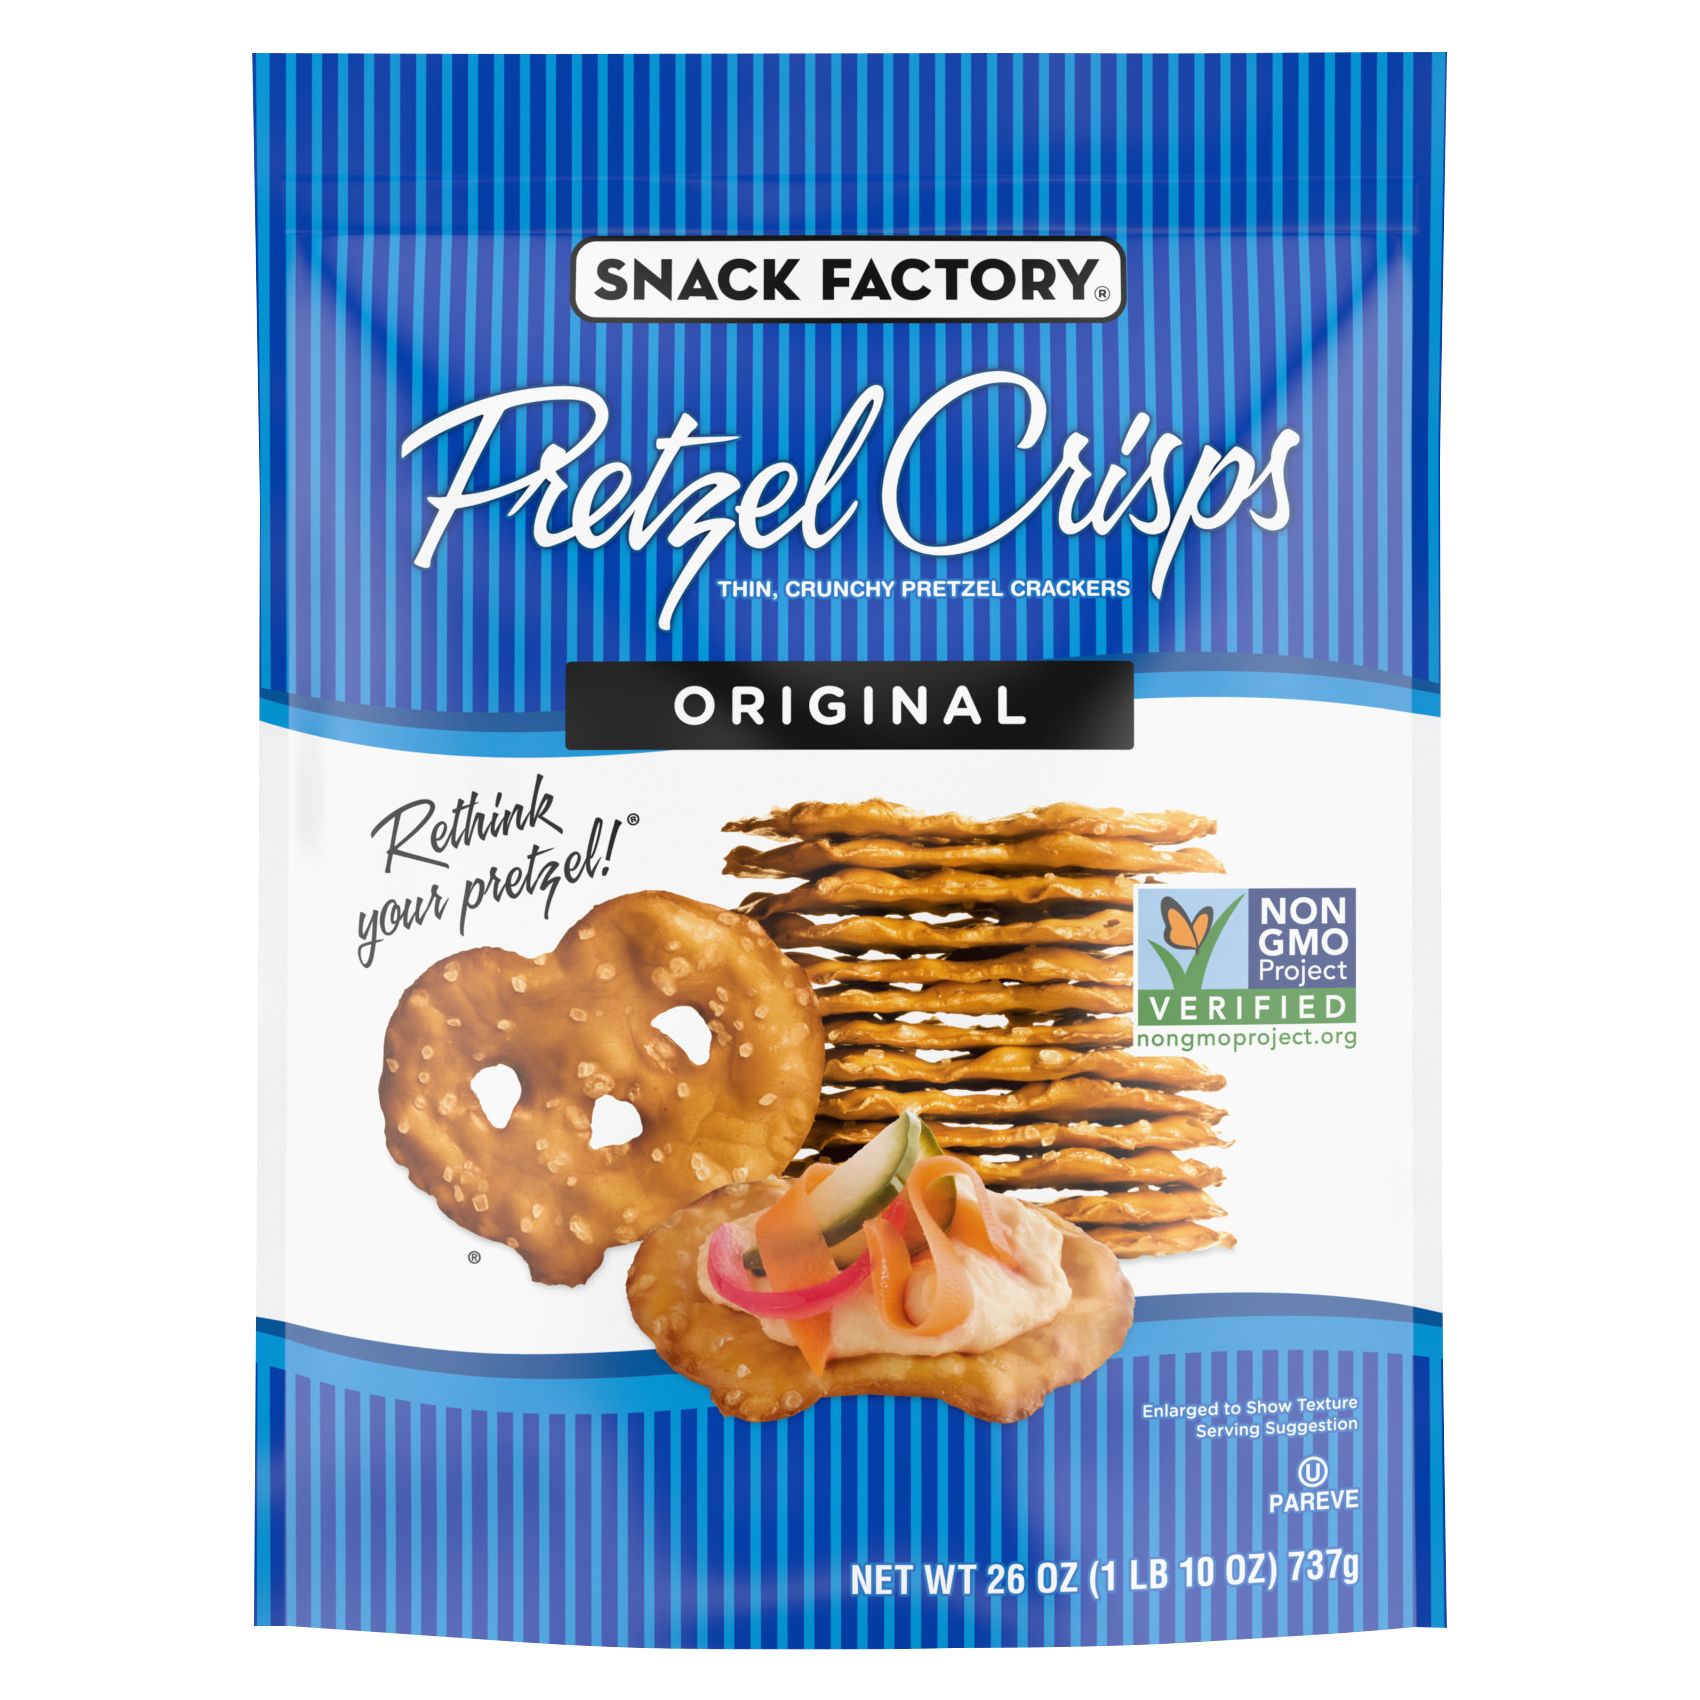 Kelly's Snips Original / Chips, crackers, pretzels, cakes